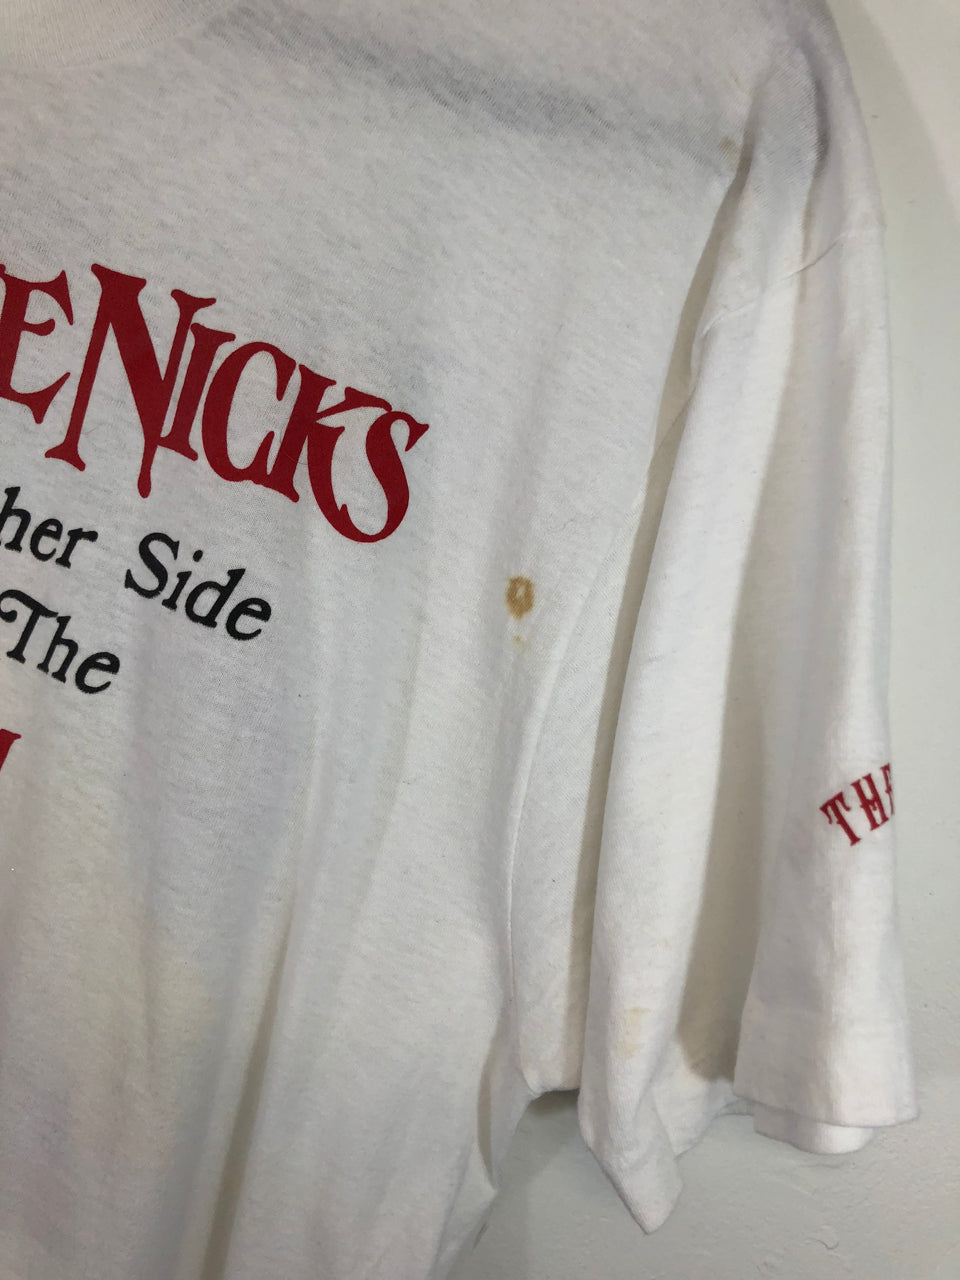 Stevie Nicks 1989 Tour T-Shirt (As Is)